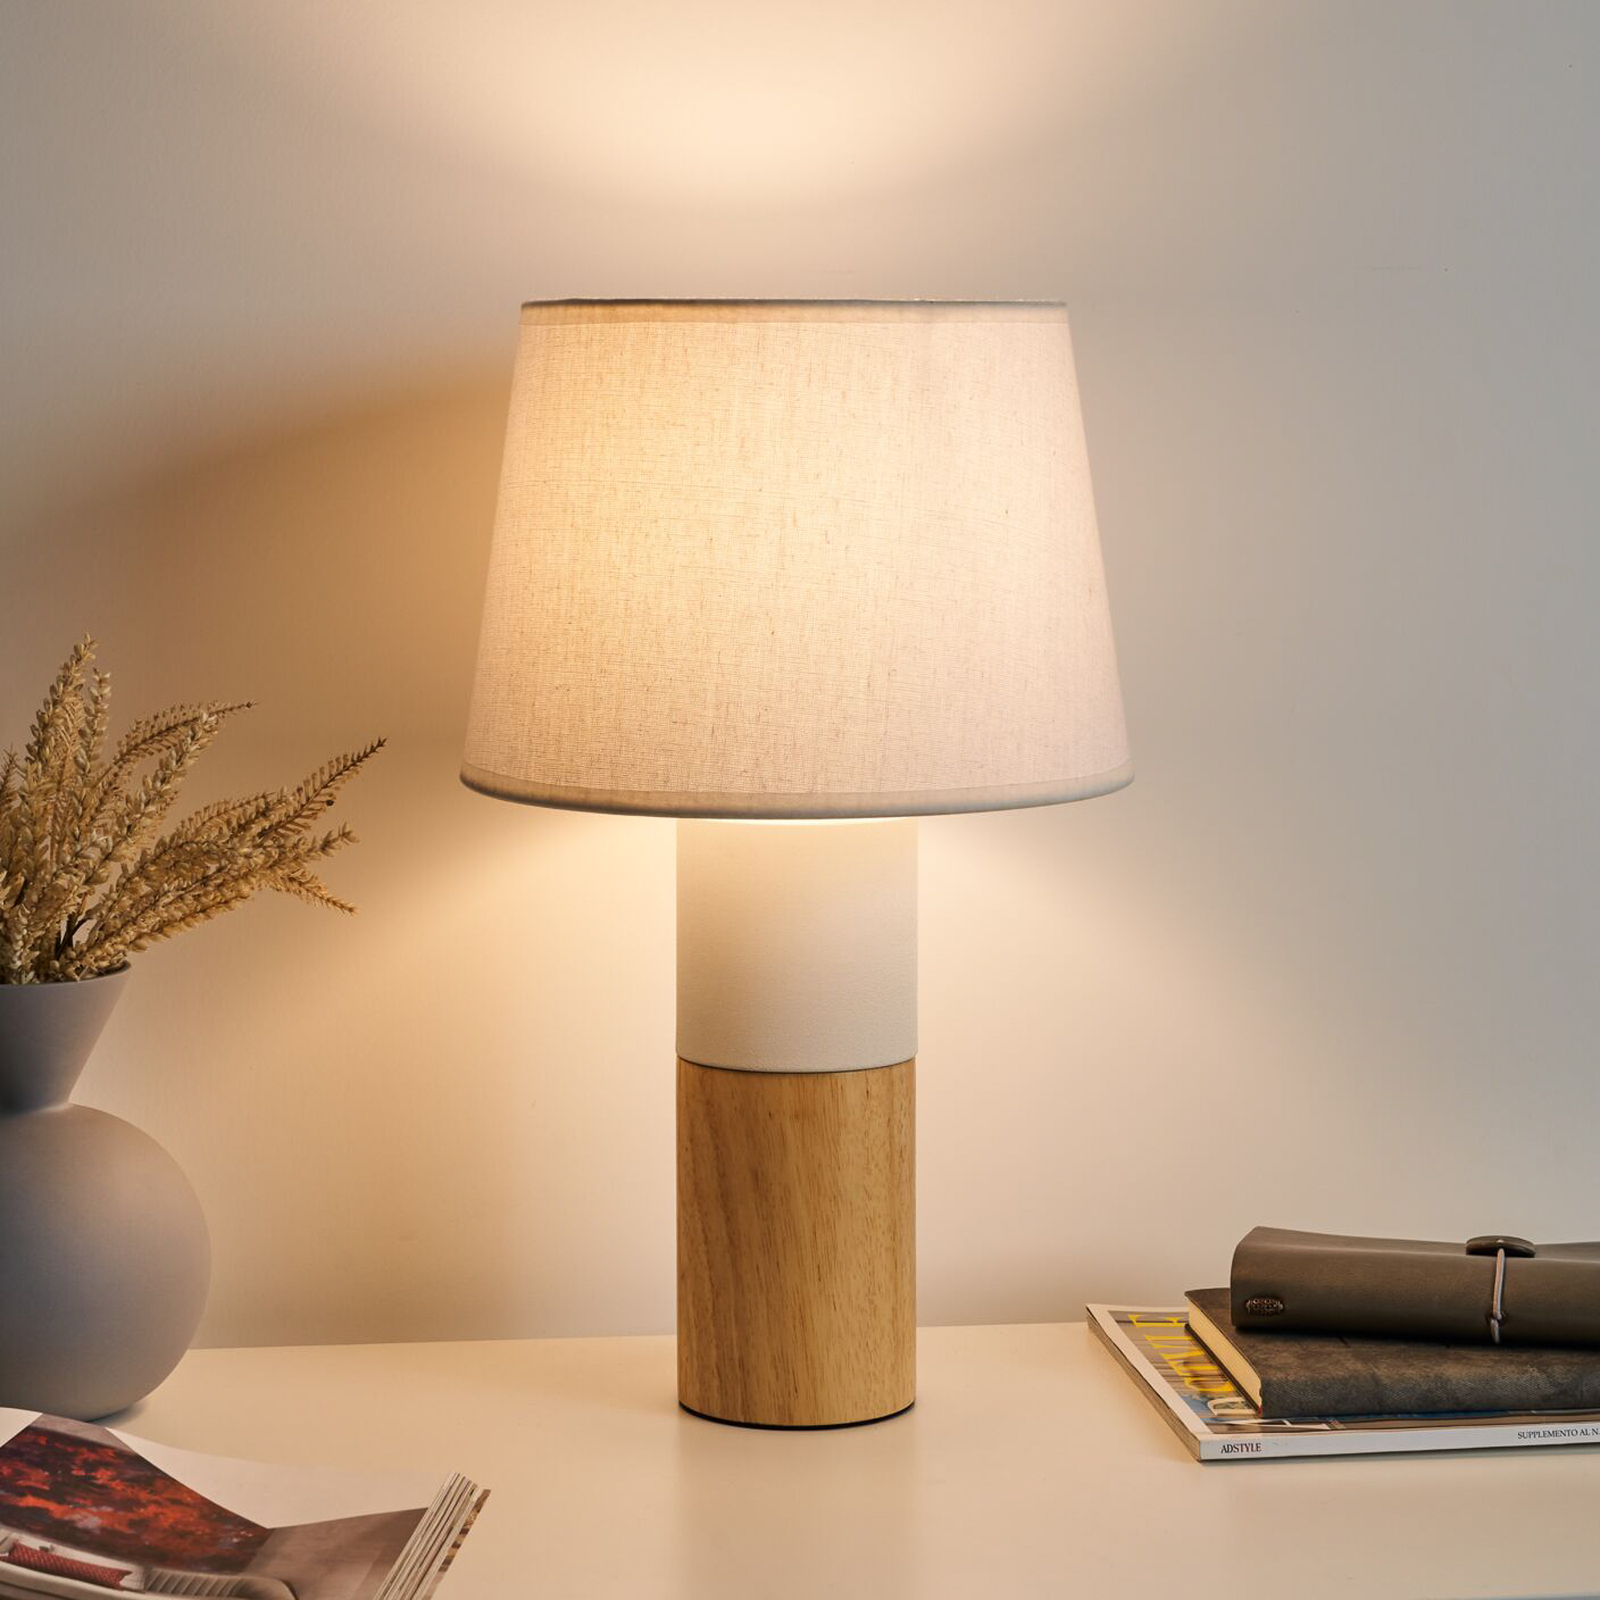 Pauleen Woody Elegance bordslampa, trä/textil